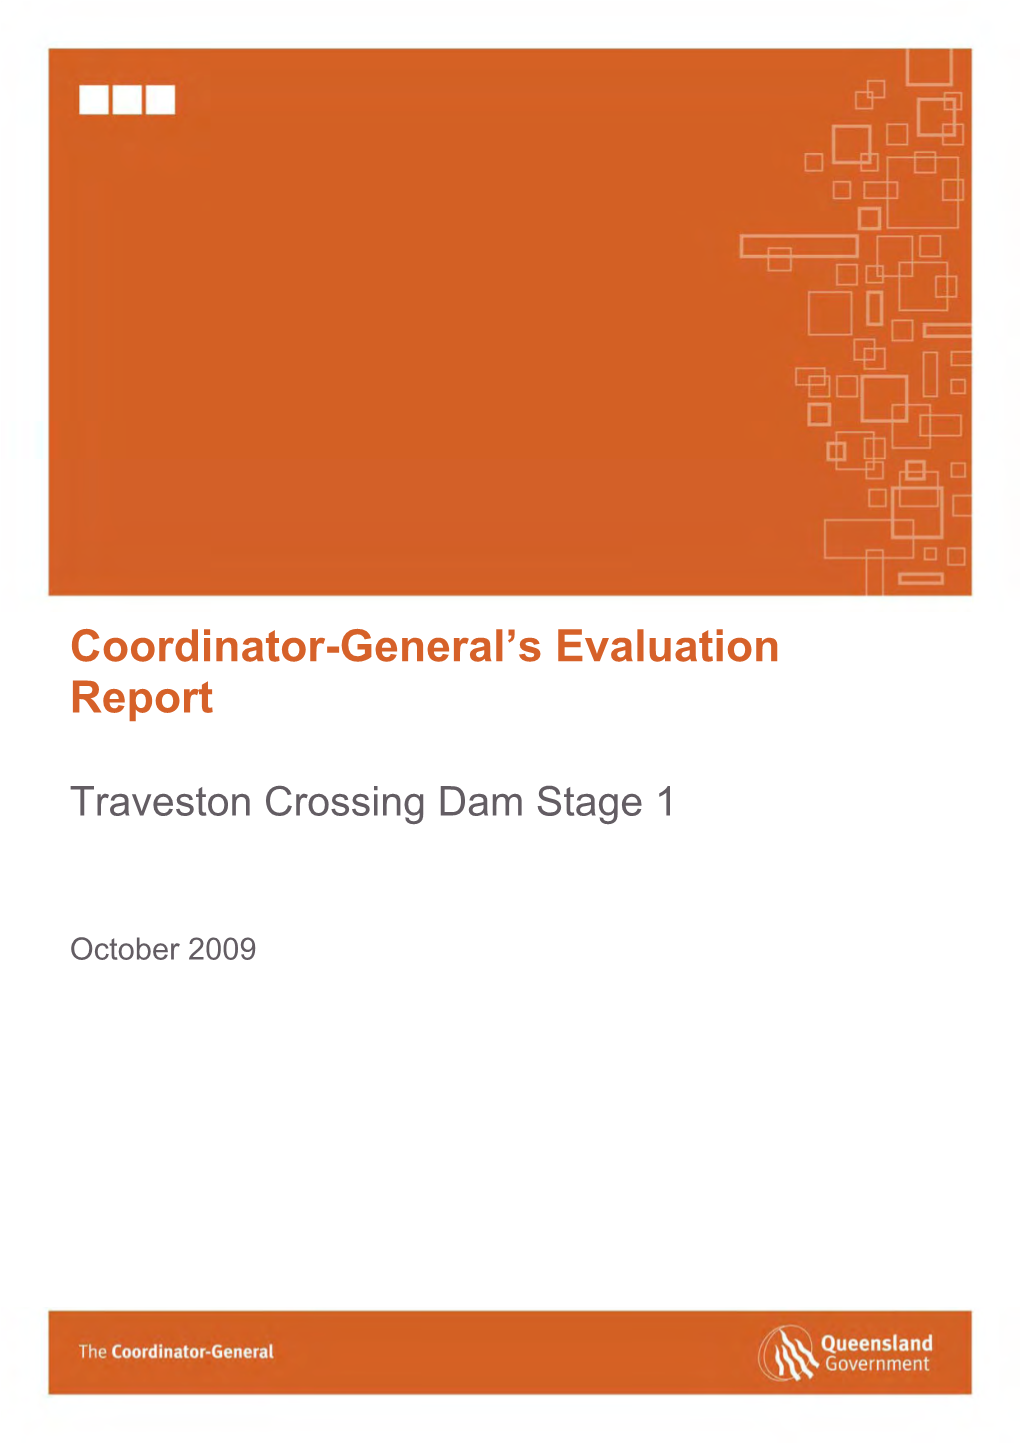 Traveston Crossing Dam Stage 1